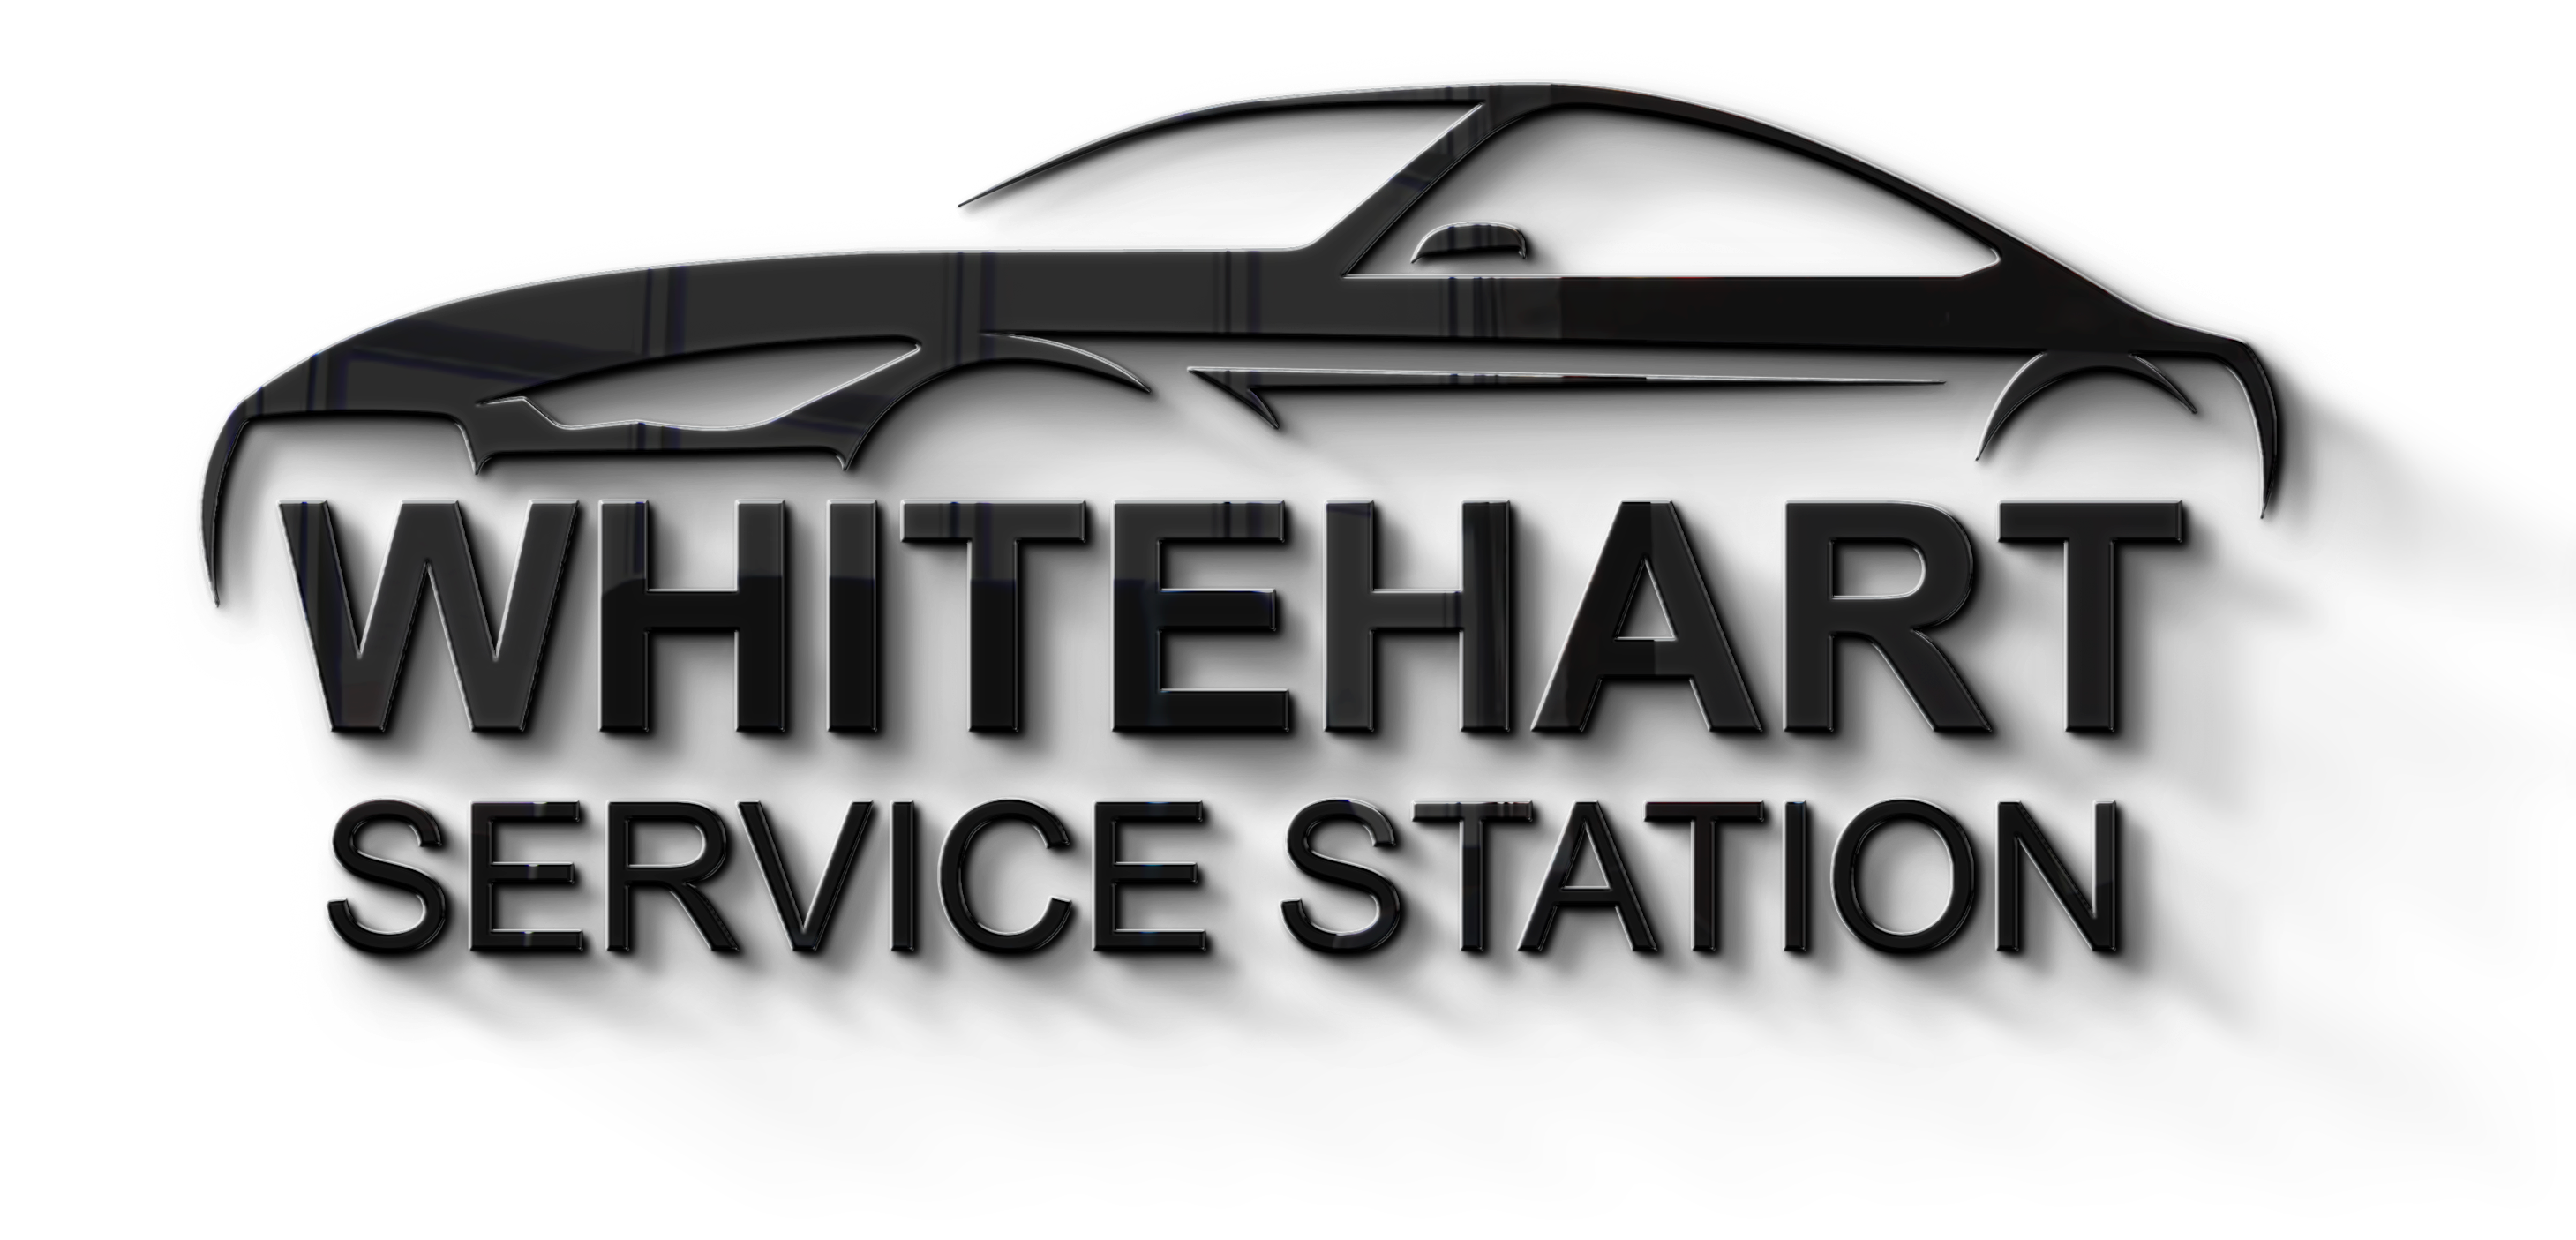 Whitehart Service Station logo